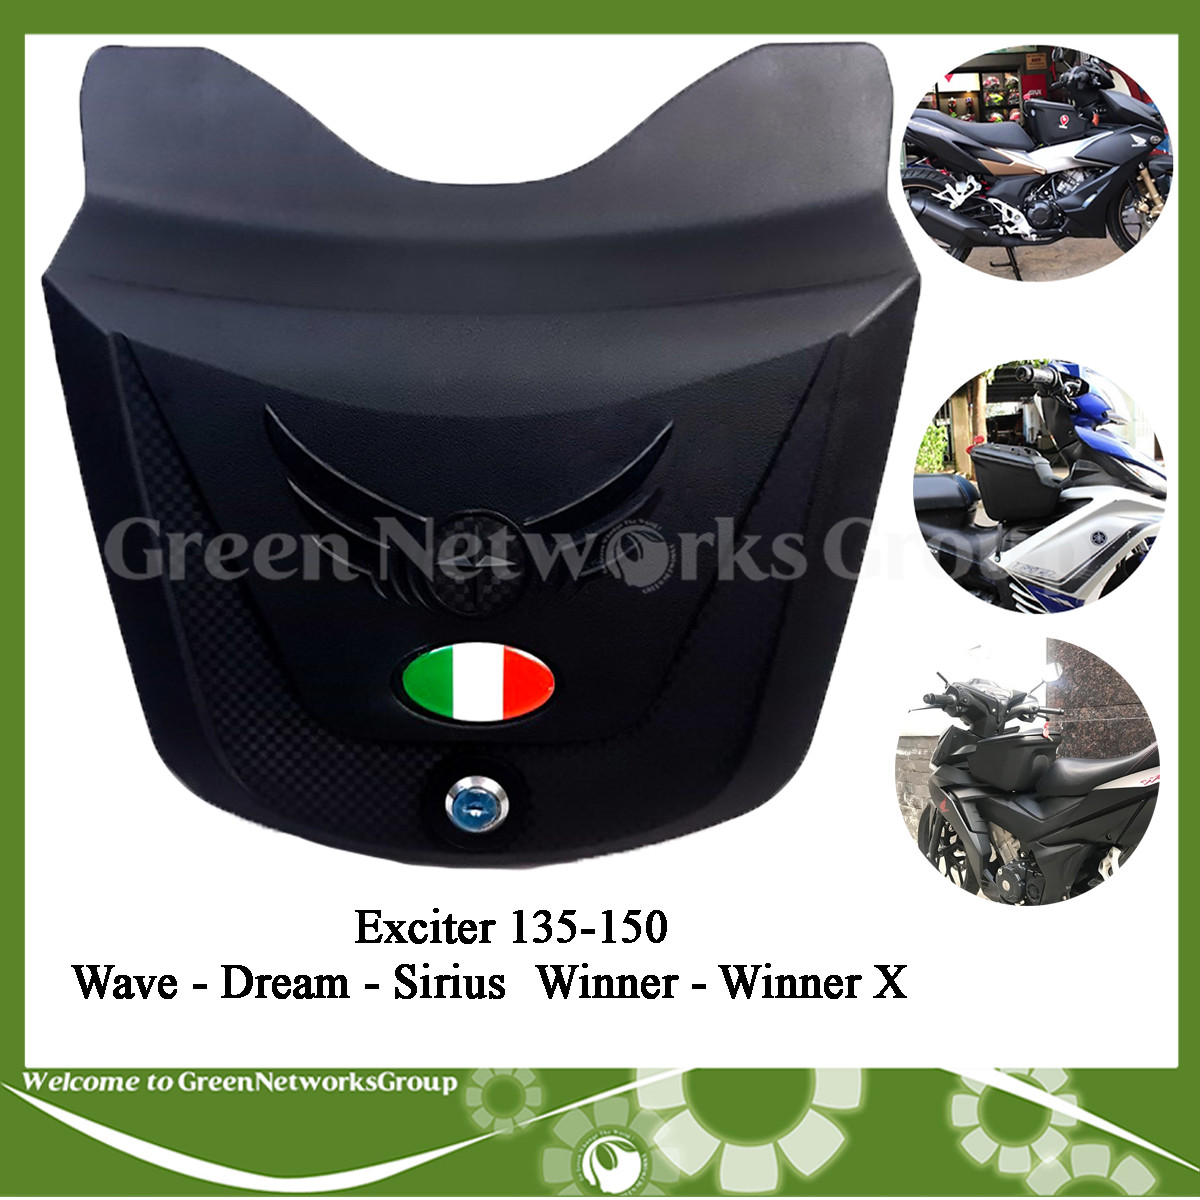 Thùng giữa lắp các loại xe Winner X Winner V1 Exciter 150 135 Wave Dream Sirius Green Networks Group